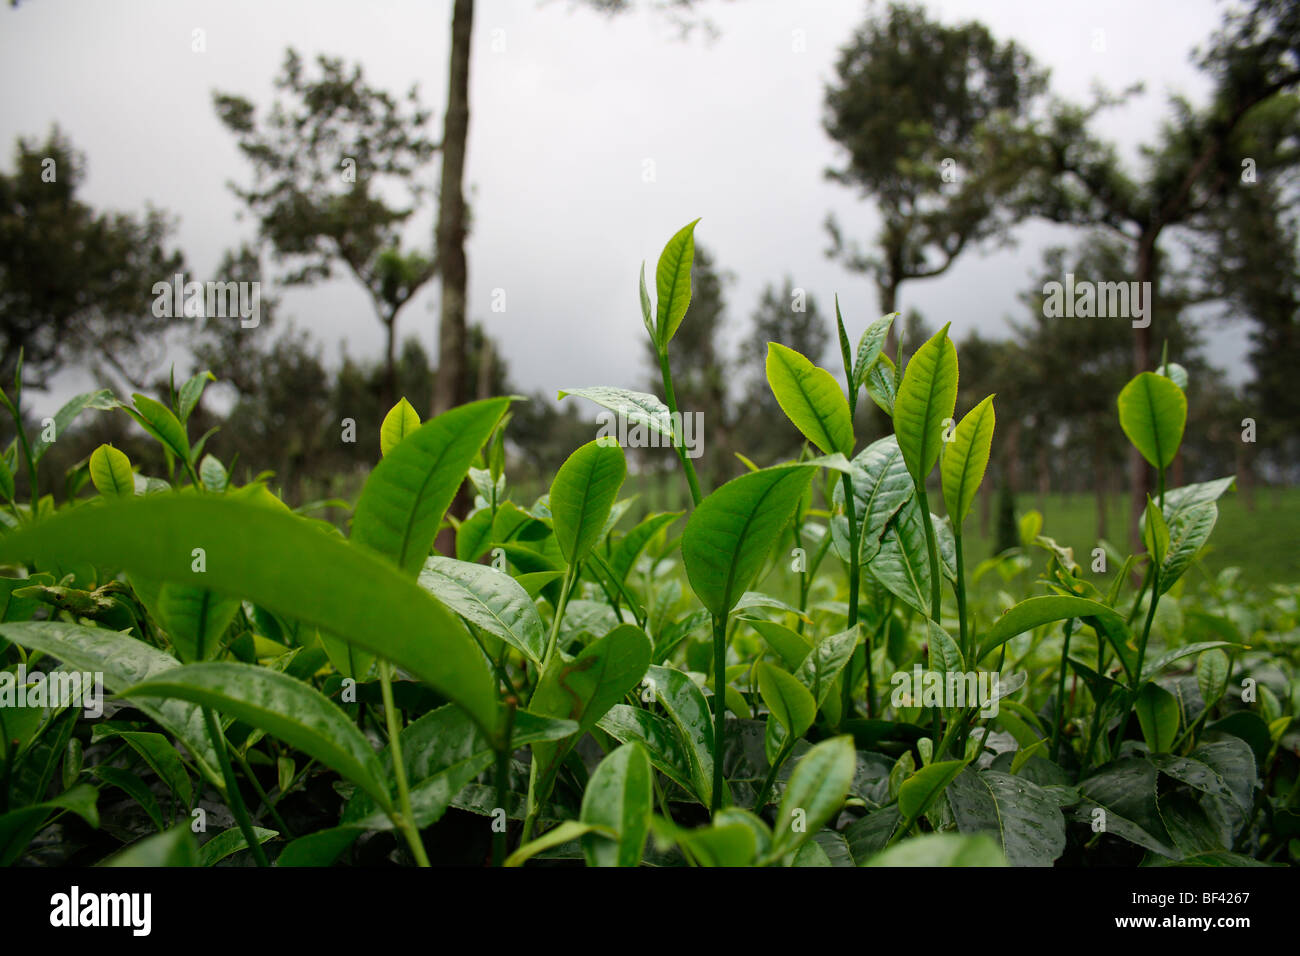 Teeplantage, Teeblätter, Munnar-Teeplantagen, grünen Teeblätter, sattes Grün, die zarten grünen Teeblätter Stockfoto